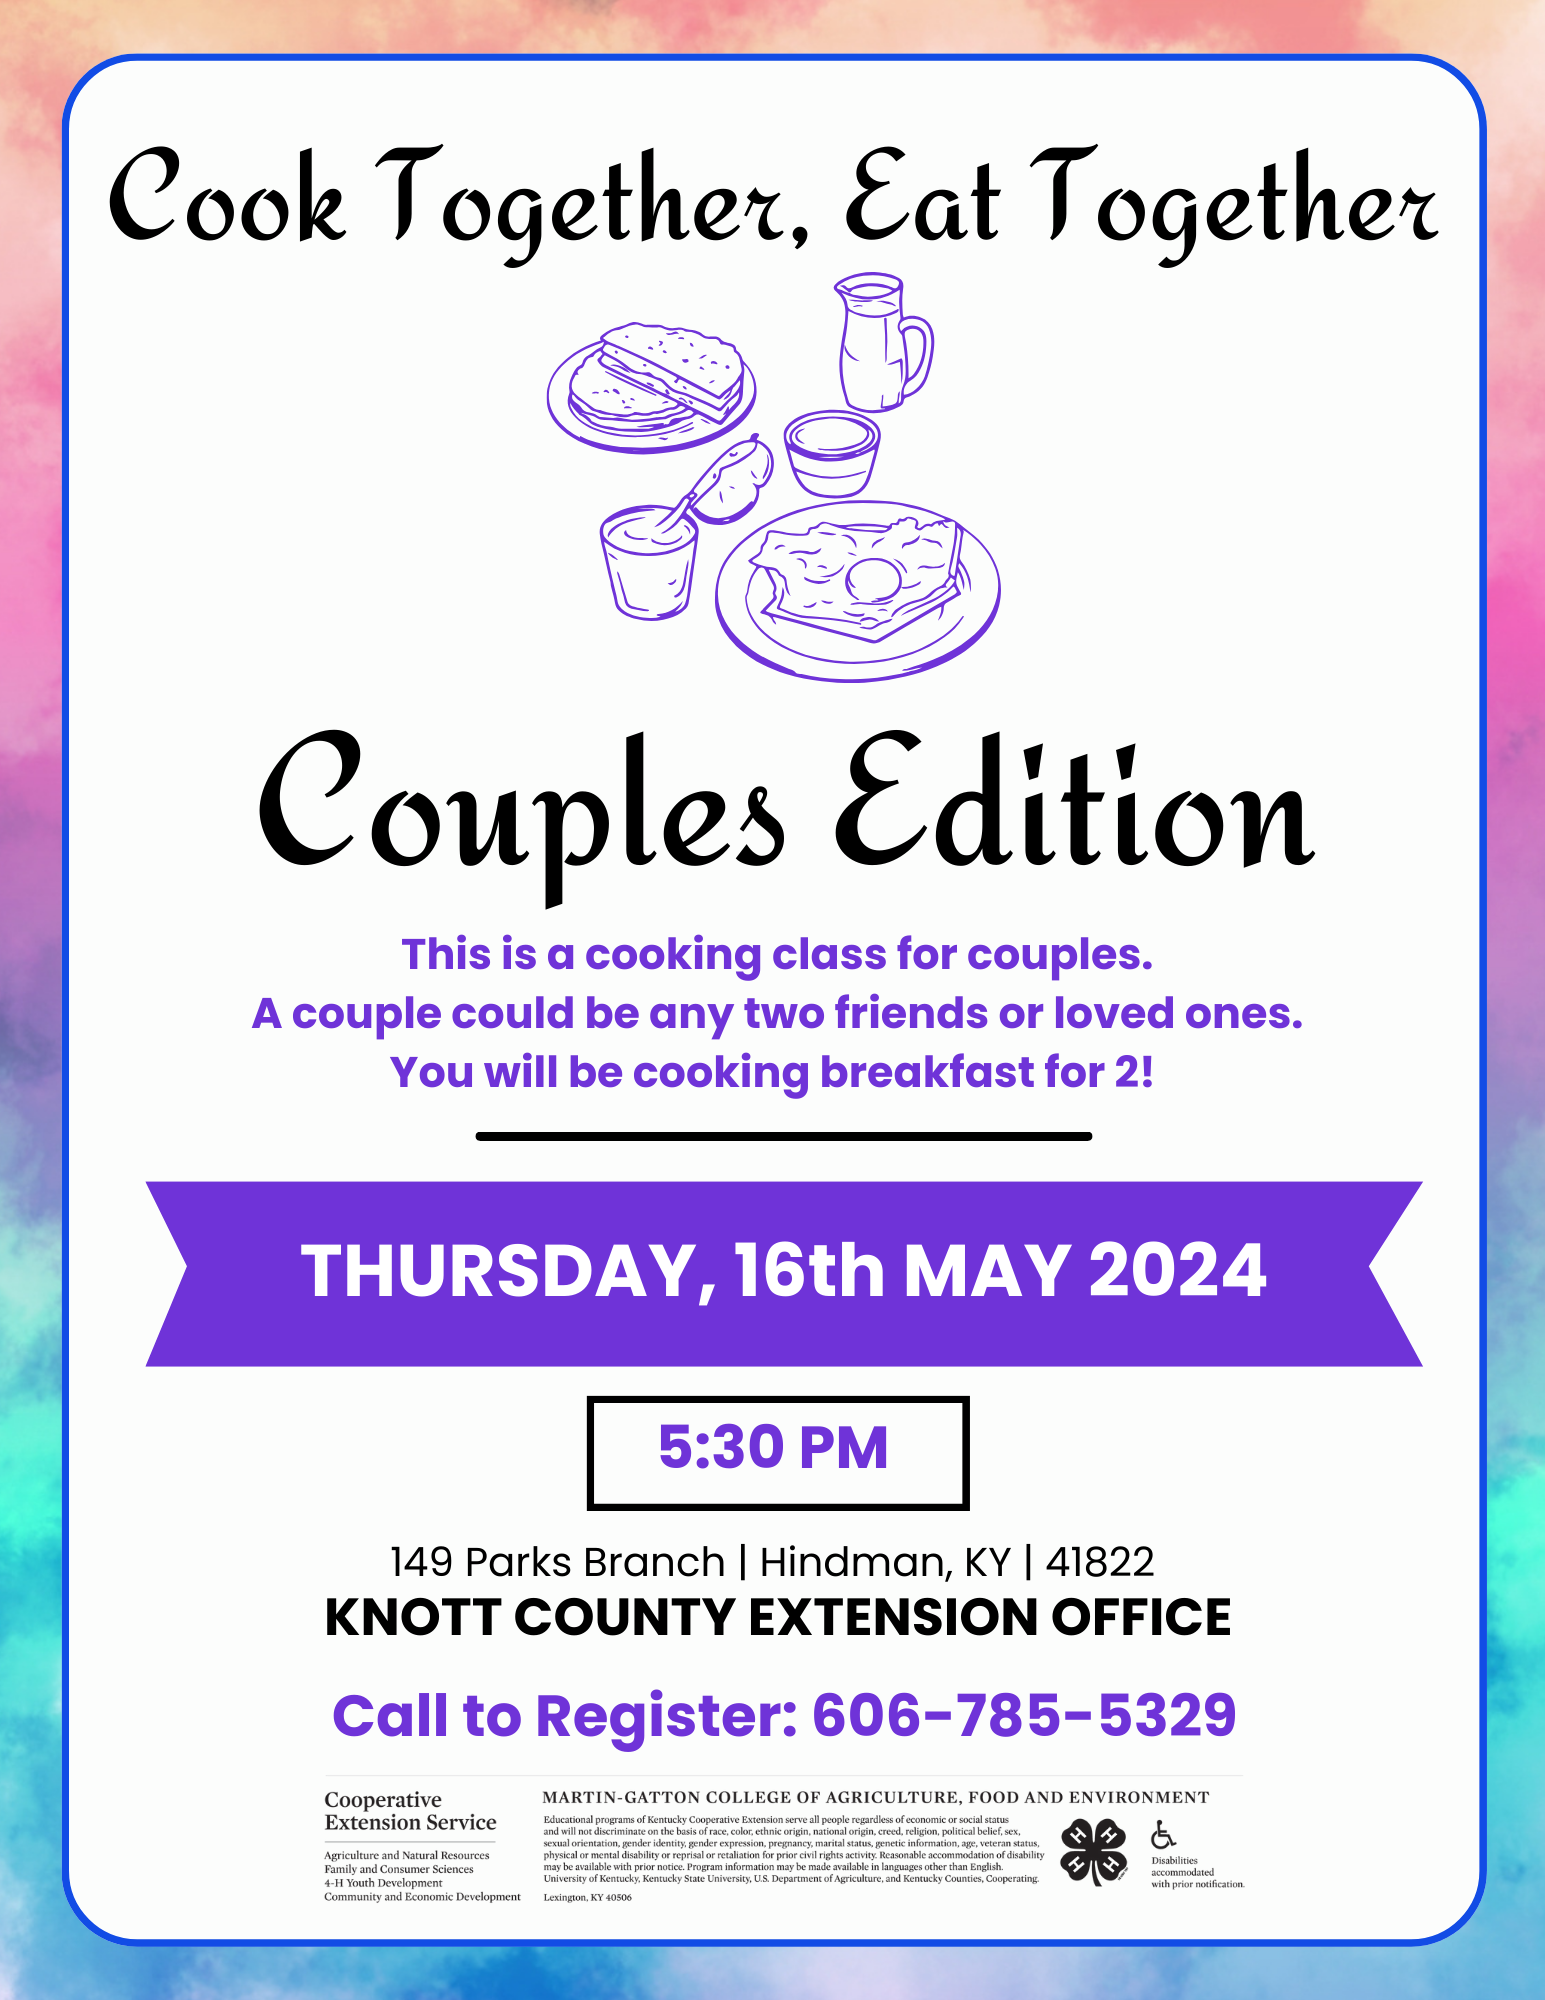 Cook Together, Eat Together - Couple Edition Flyer